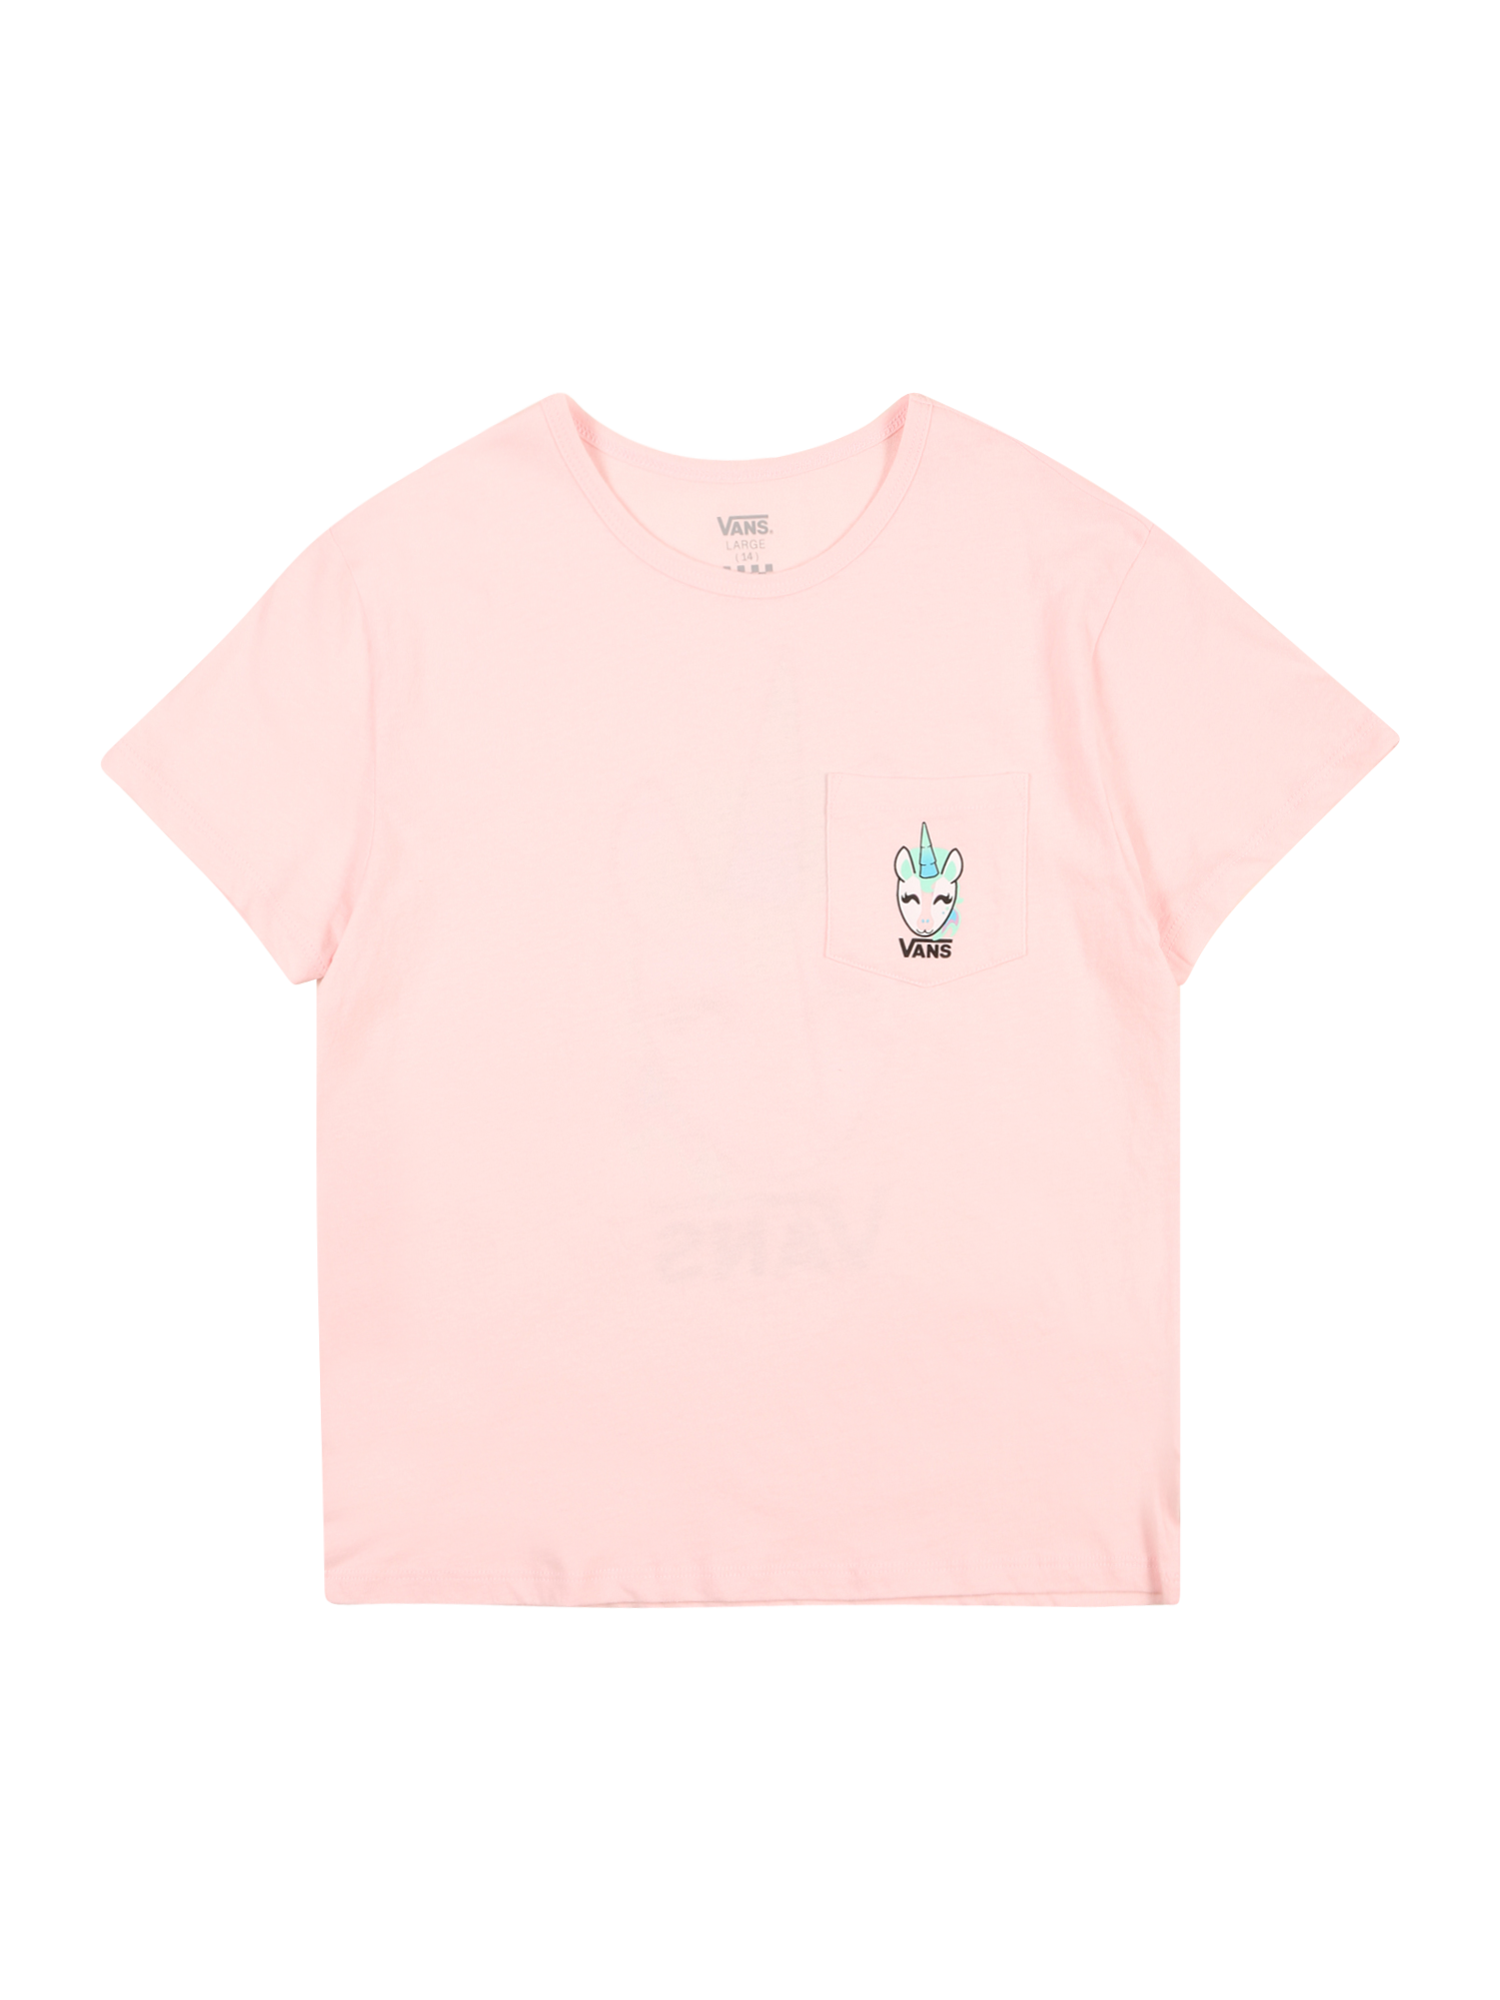 Bimba Bambini VANS T-Shirt DISCO UNICORN in Rosa, Rosa Antico 